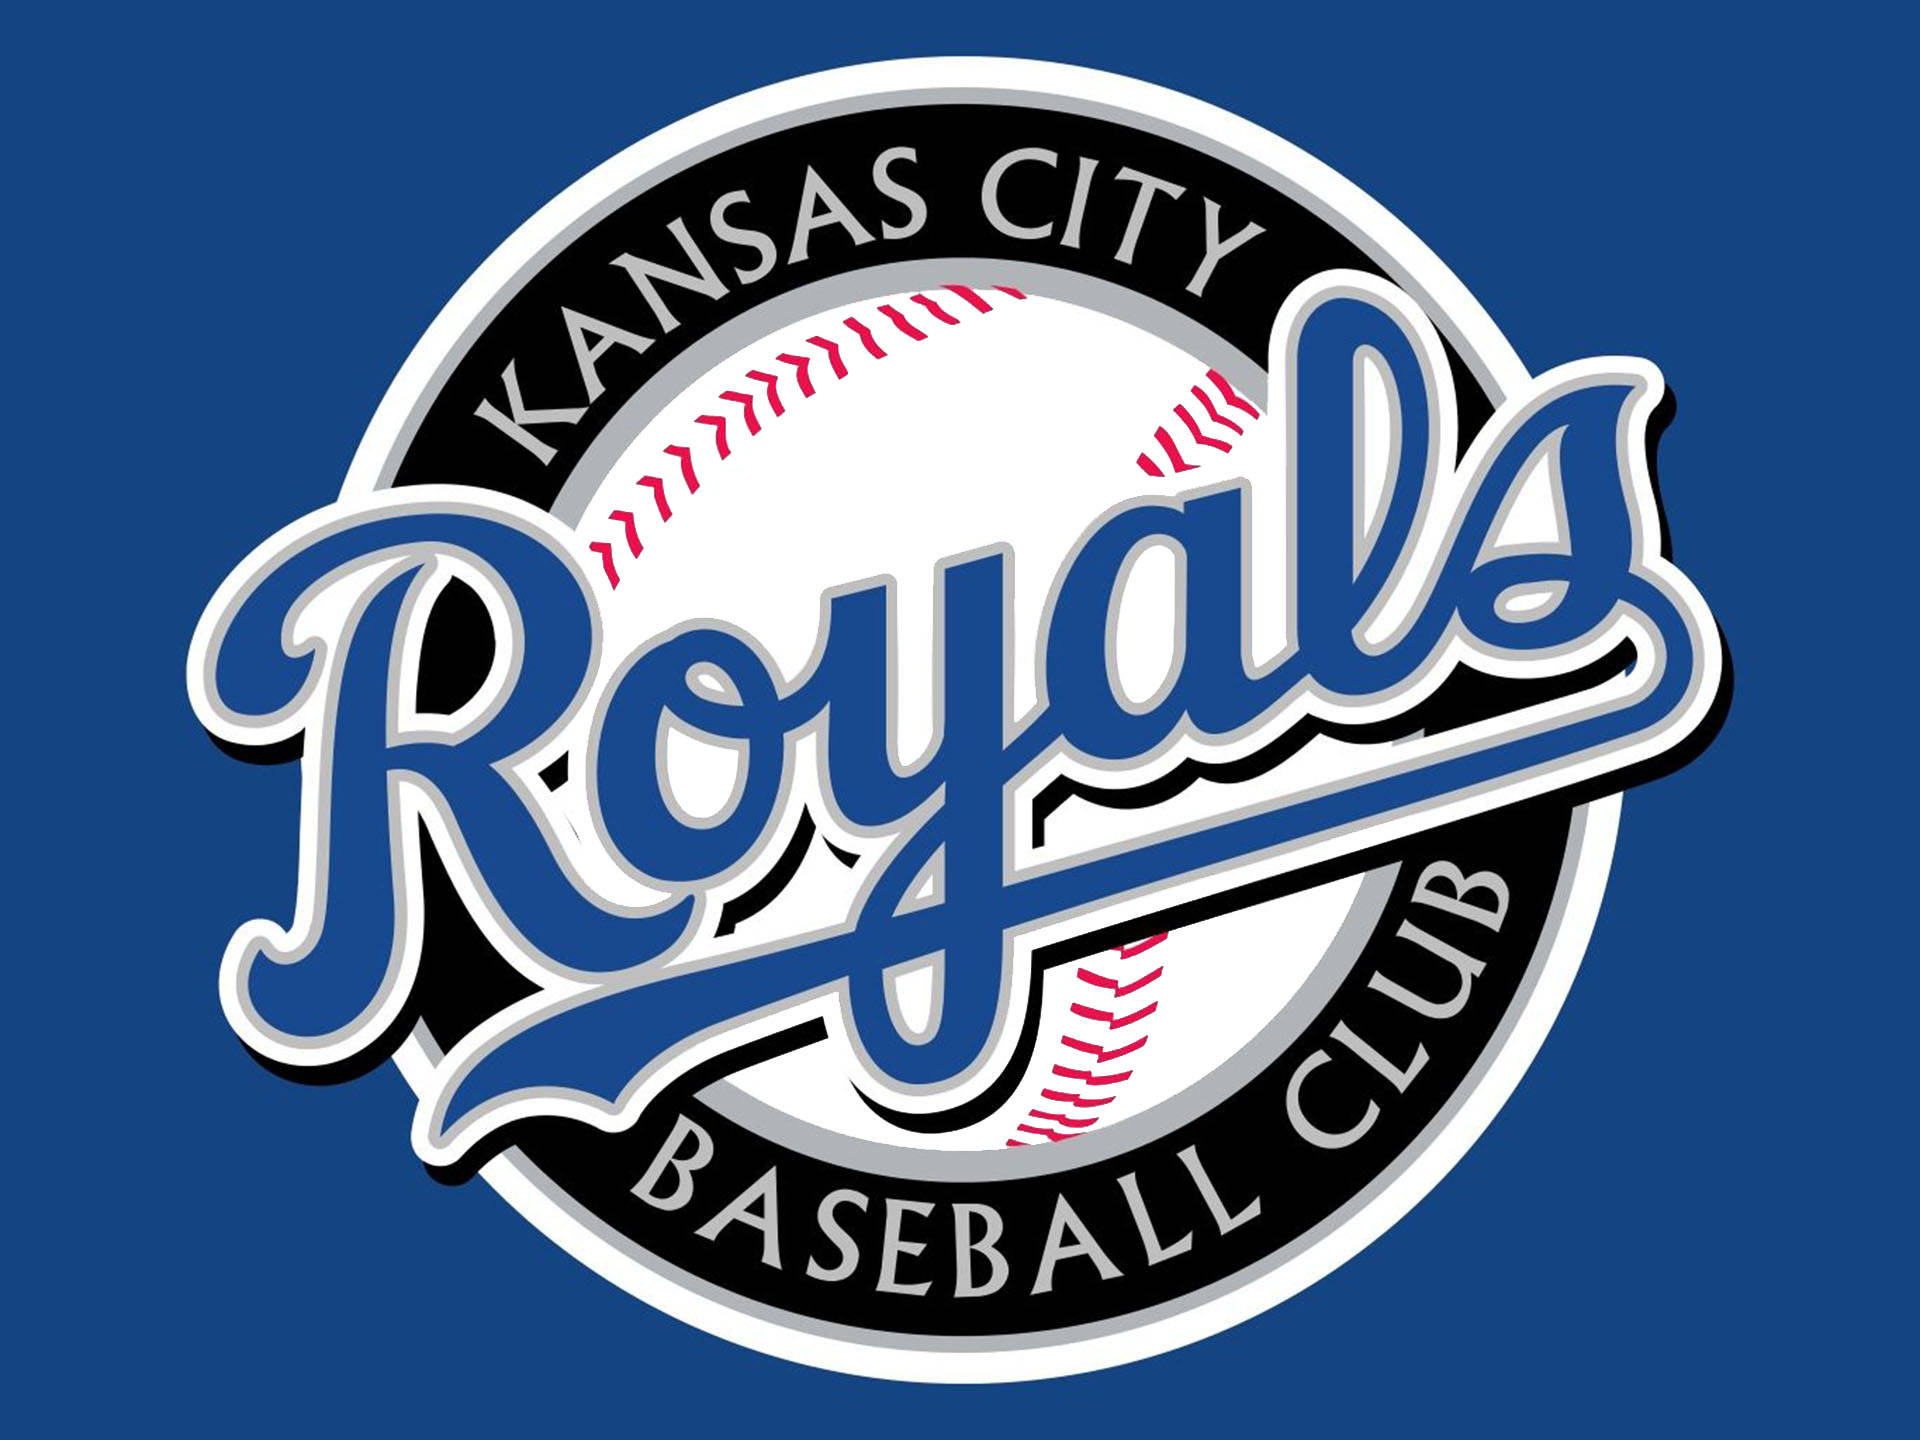 Kansas City Royals Baseball Club Background